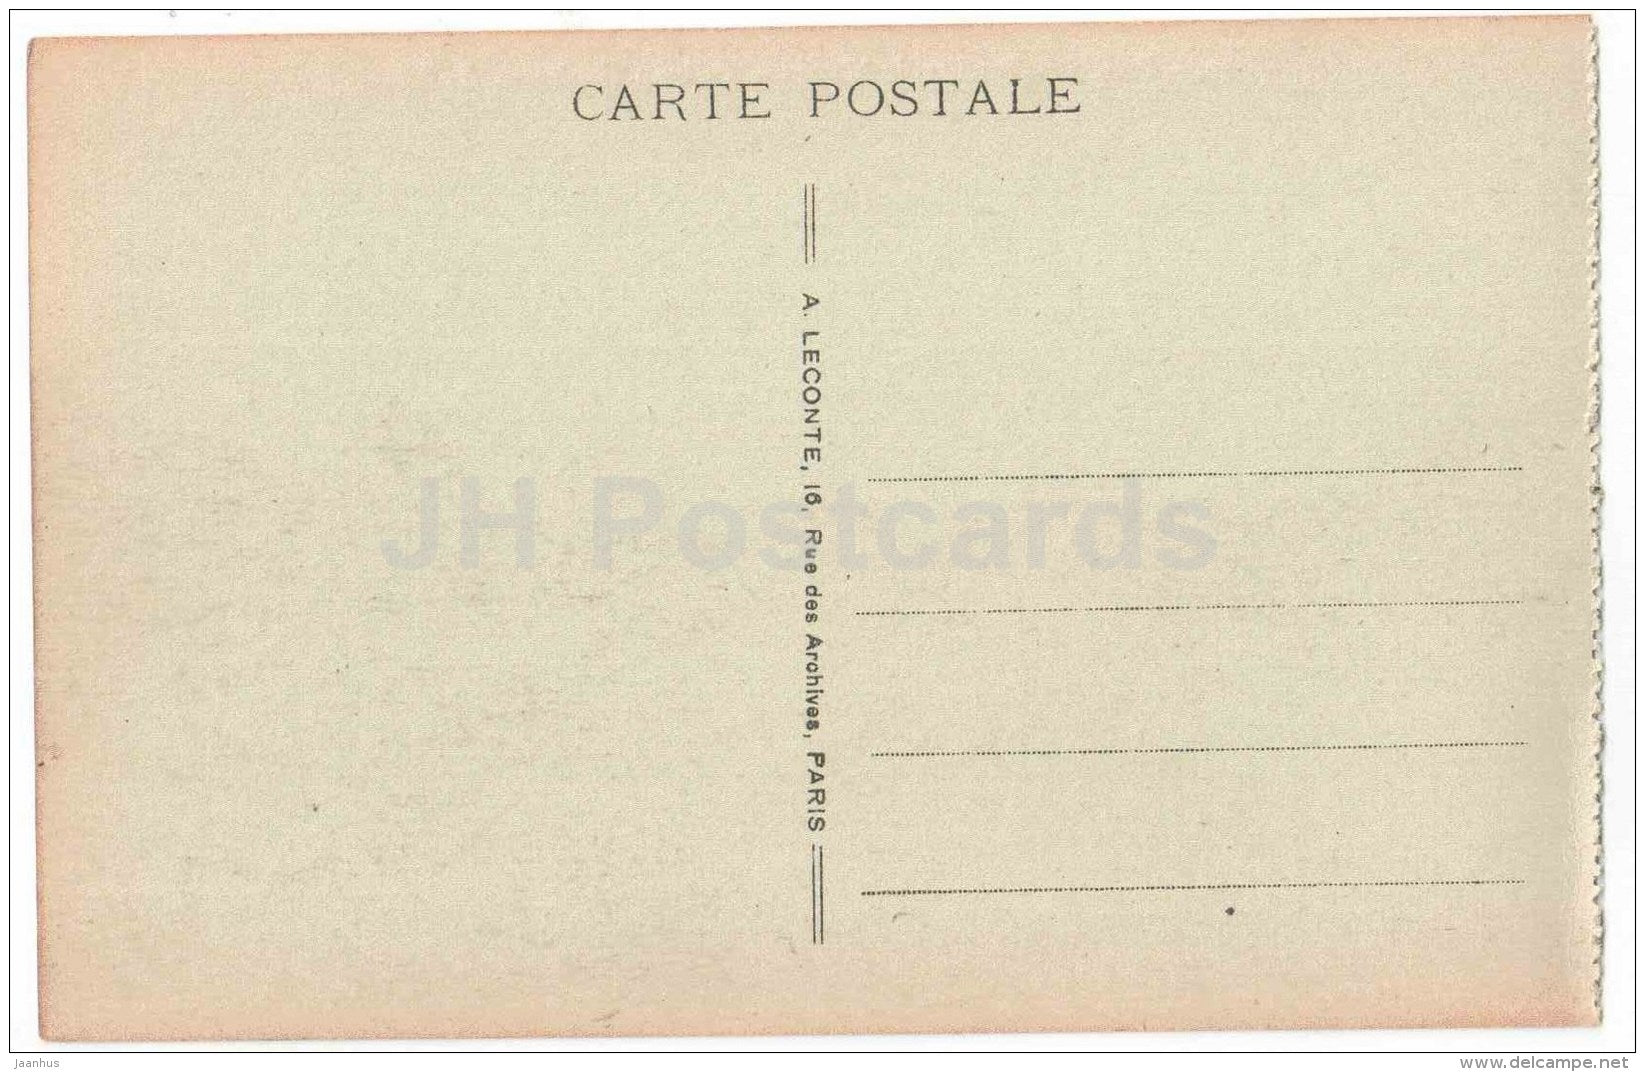 Pavillon de Marsan - Tuileries Gardens - 40 - Paris - France - unused - JH Postcards